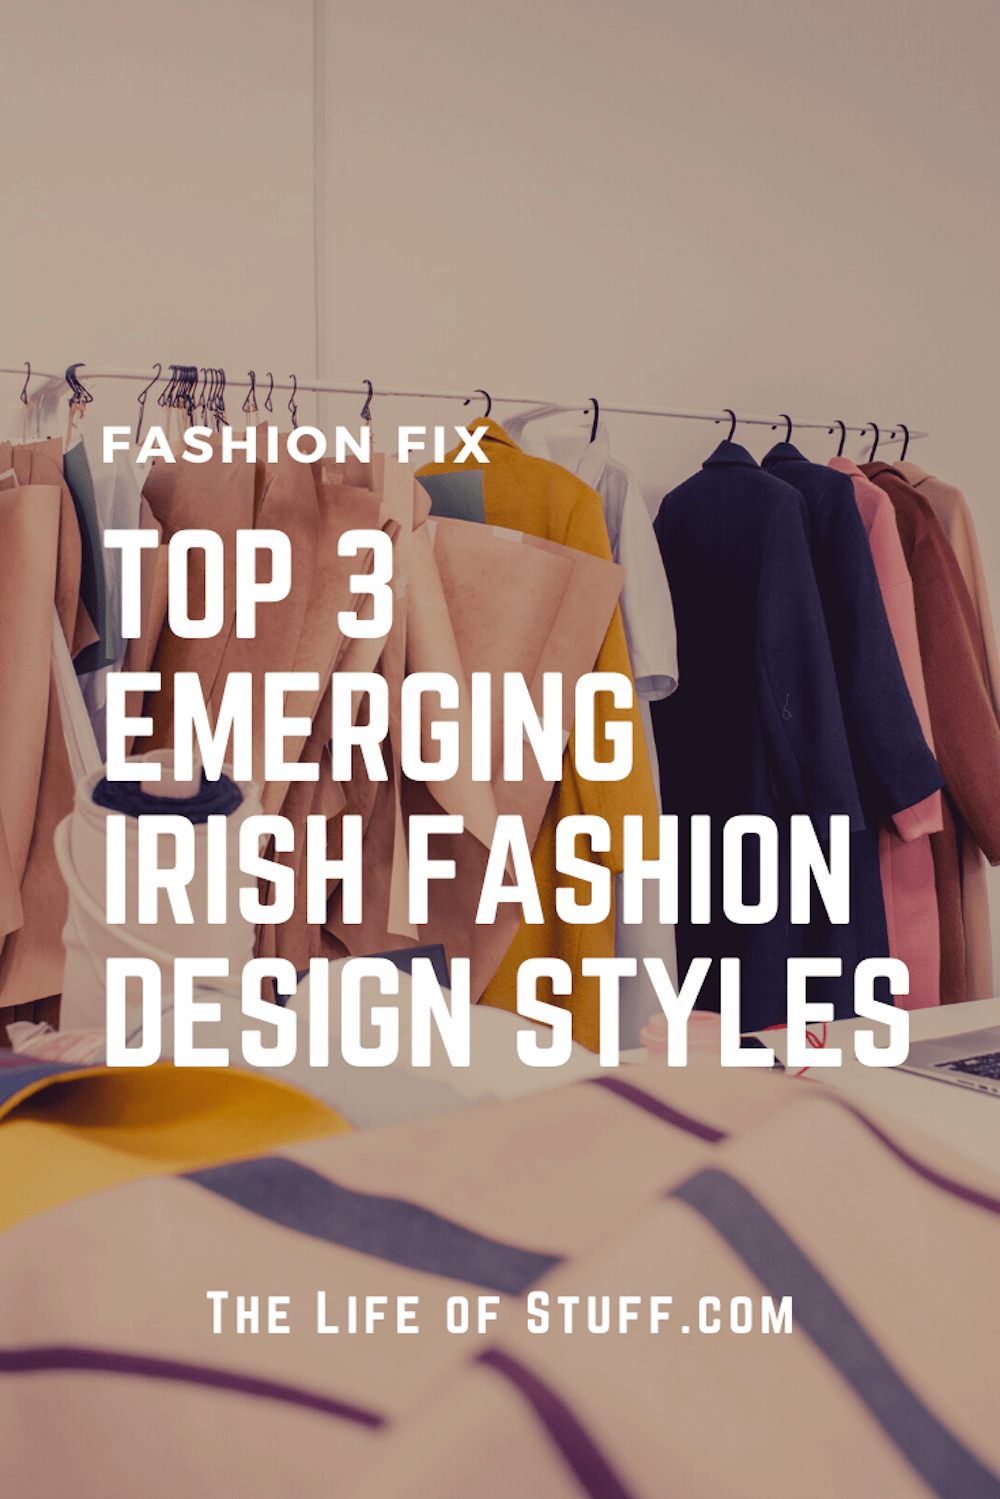 Fashion Fix - Top 3 Emerging Irish Fashion Design Styles - The Life of Stuff